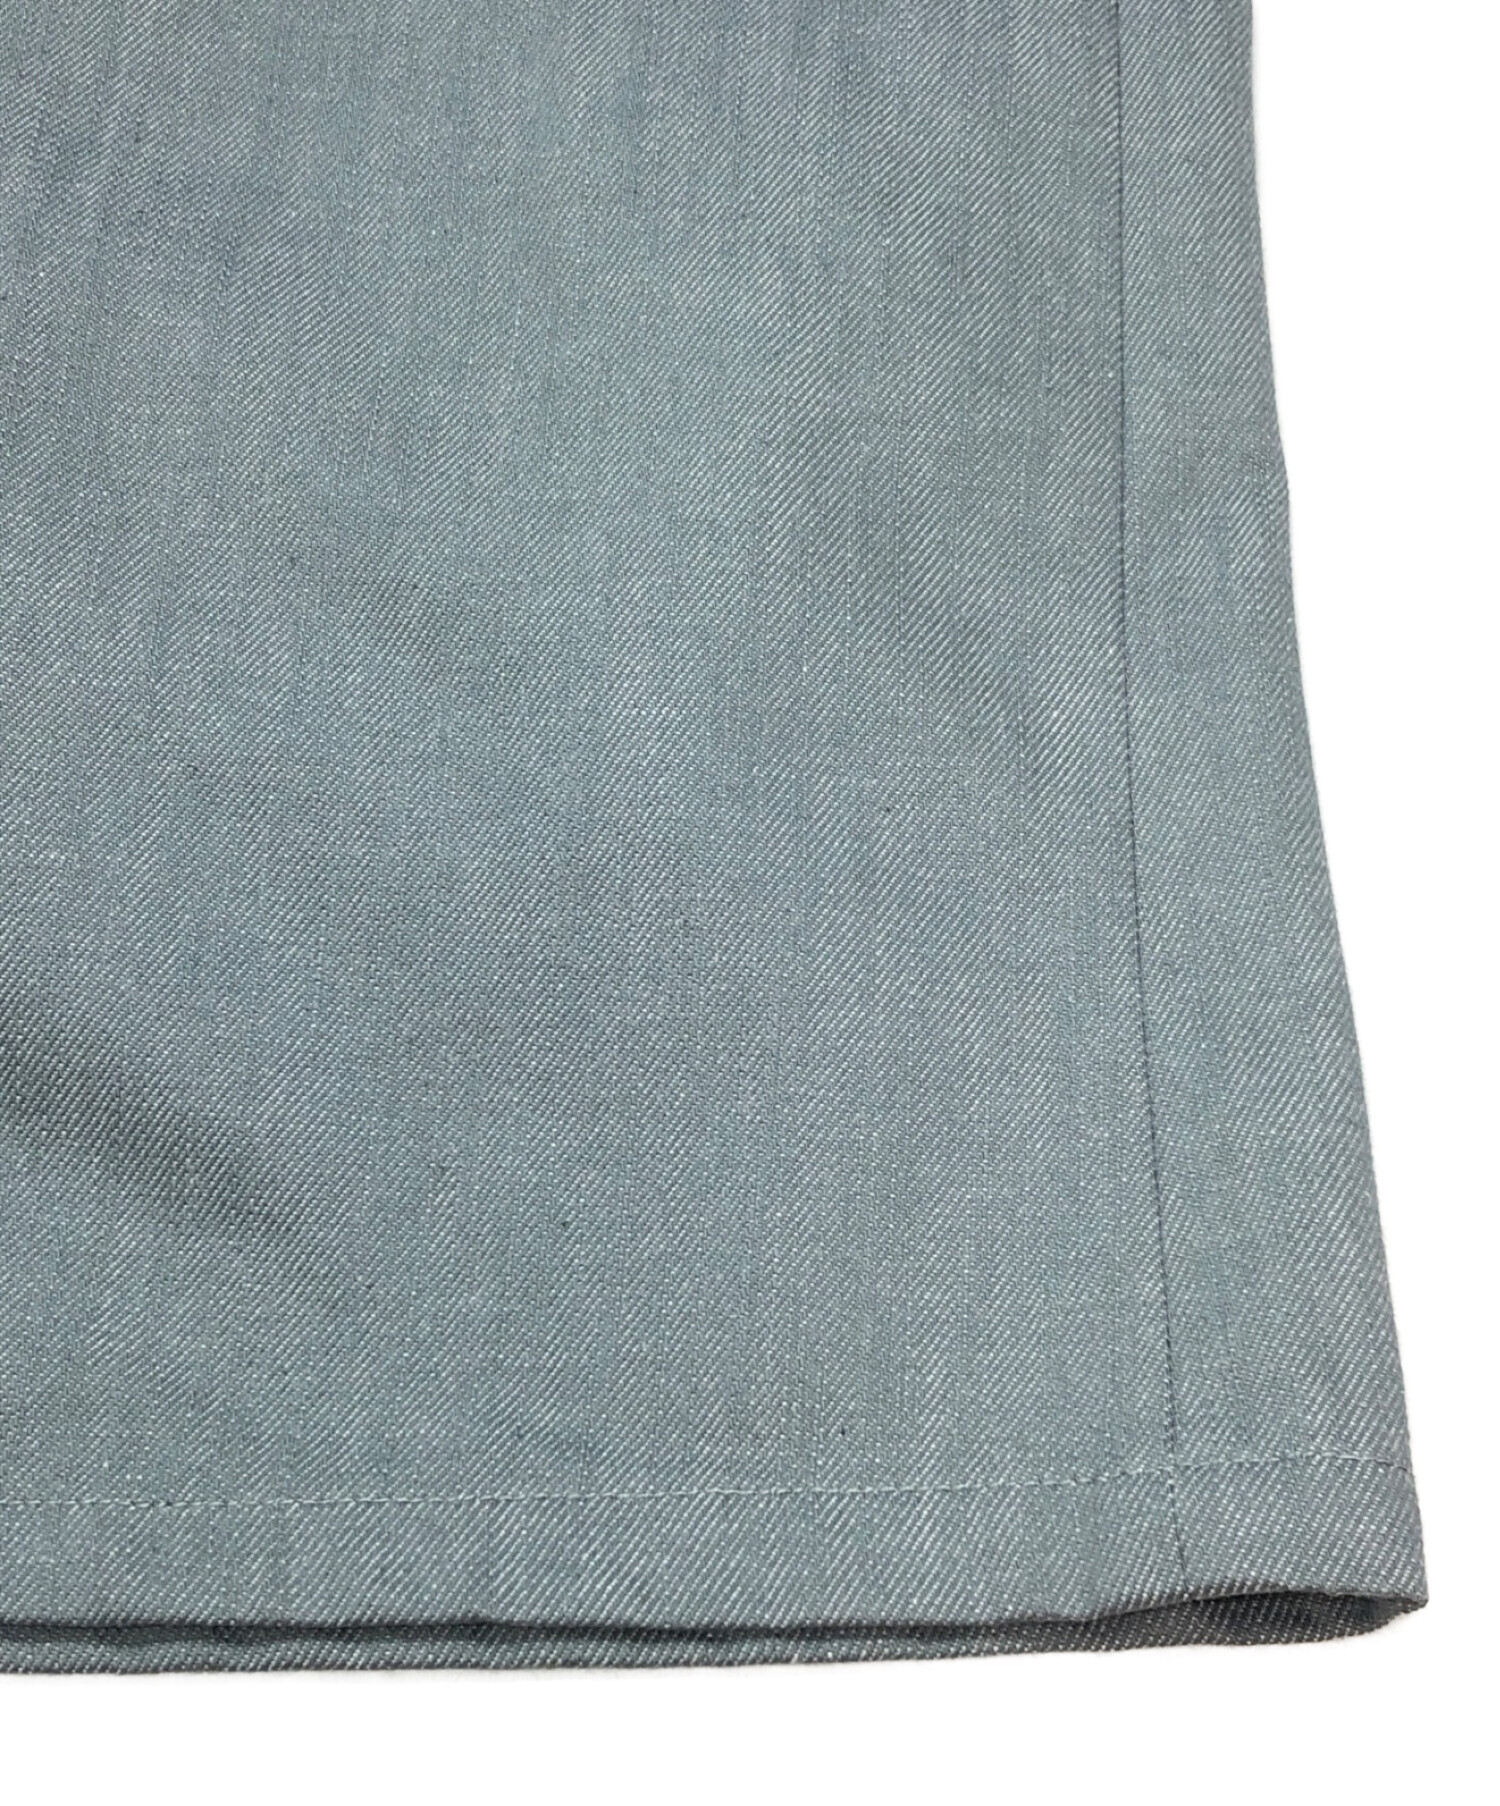 BLUE LABEL CRESTBRIDGE (ブルーレーベルクレストブリッジ) ハーブカラーシャンブレーツイルIラインスカート ブルー  サイズ:SIZE 38 未使用品